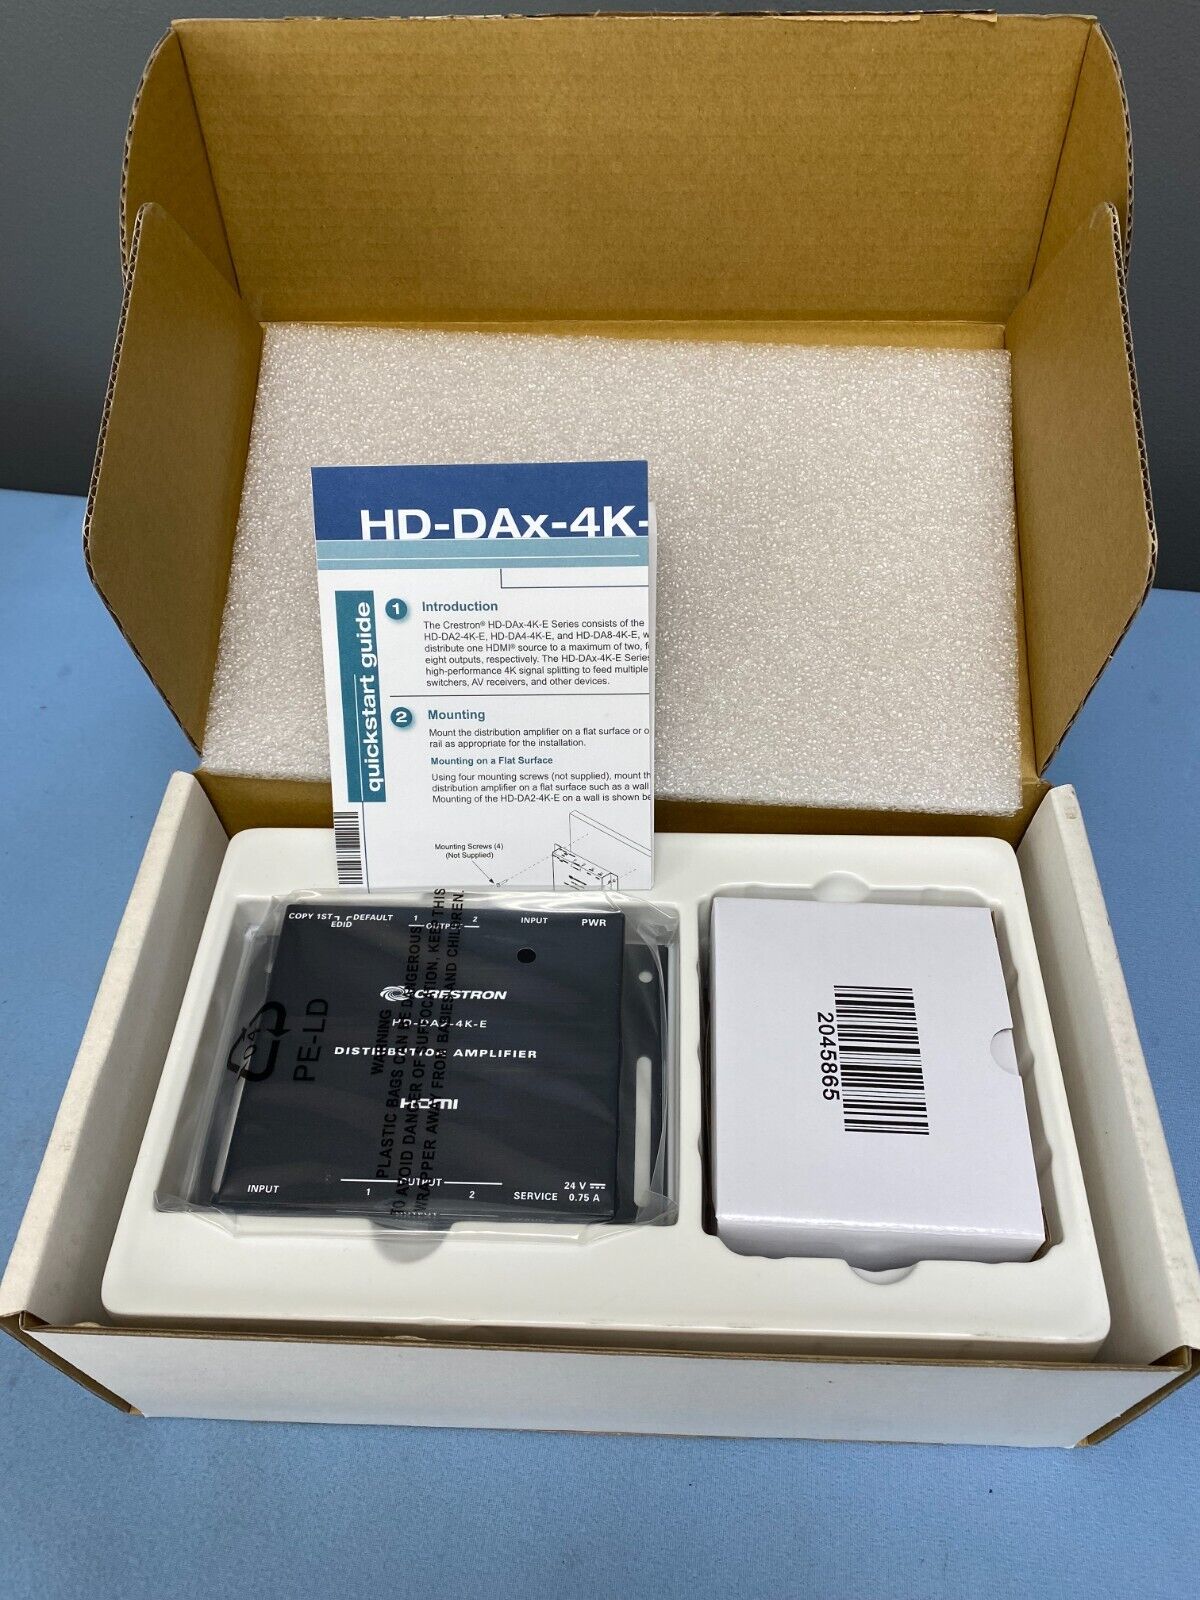 Crestron HD-DA2-4K-E 1-to-2 4K HDMI Distribution Amplifier 6507050 NOB